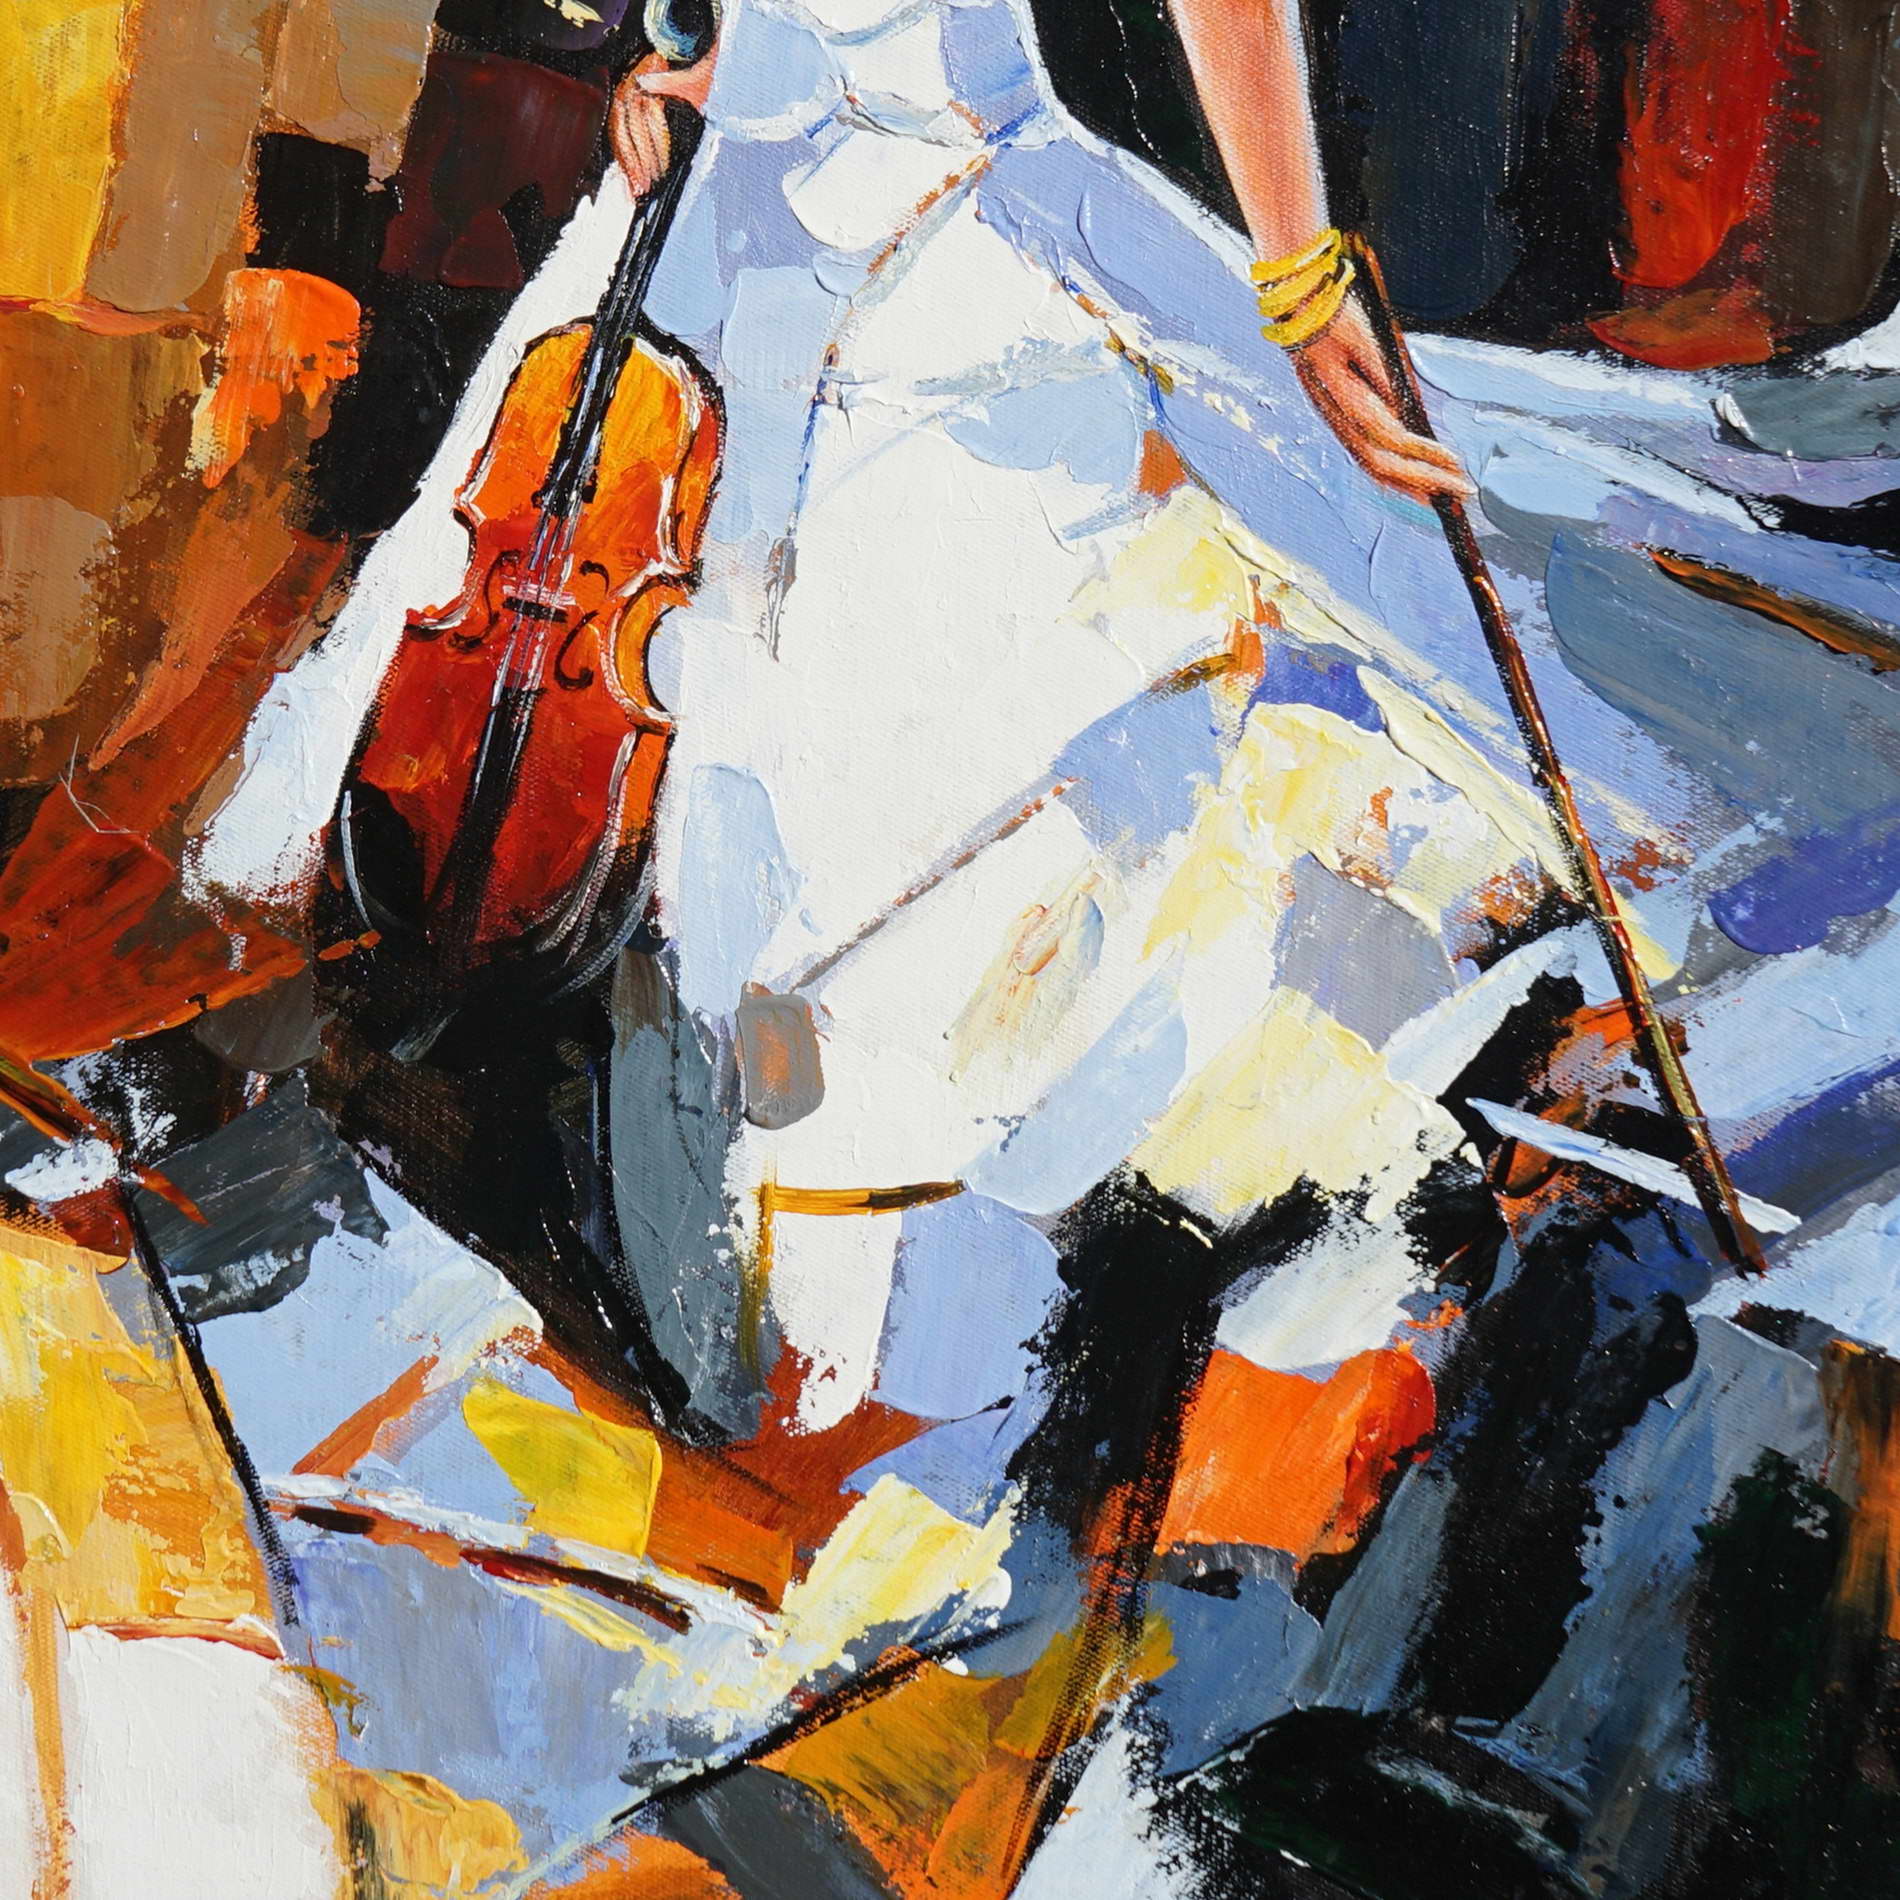 Hand painted Violinist in elegant dress 50x70cm